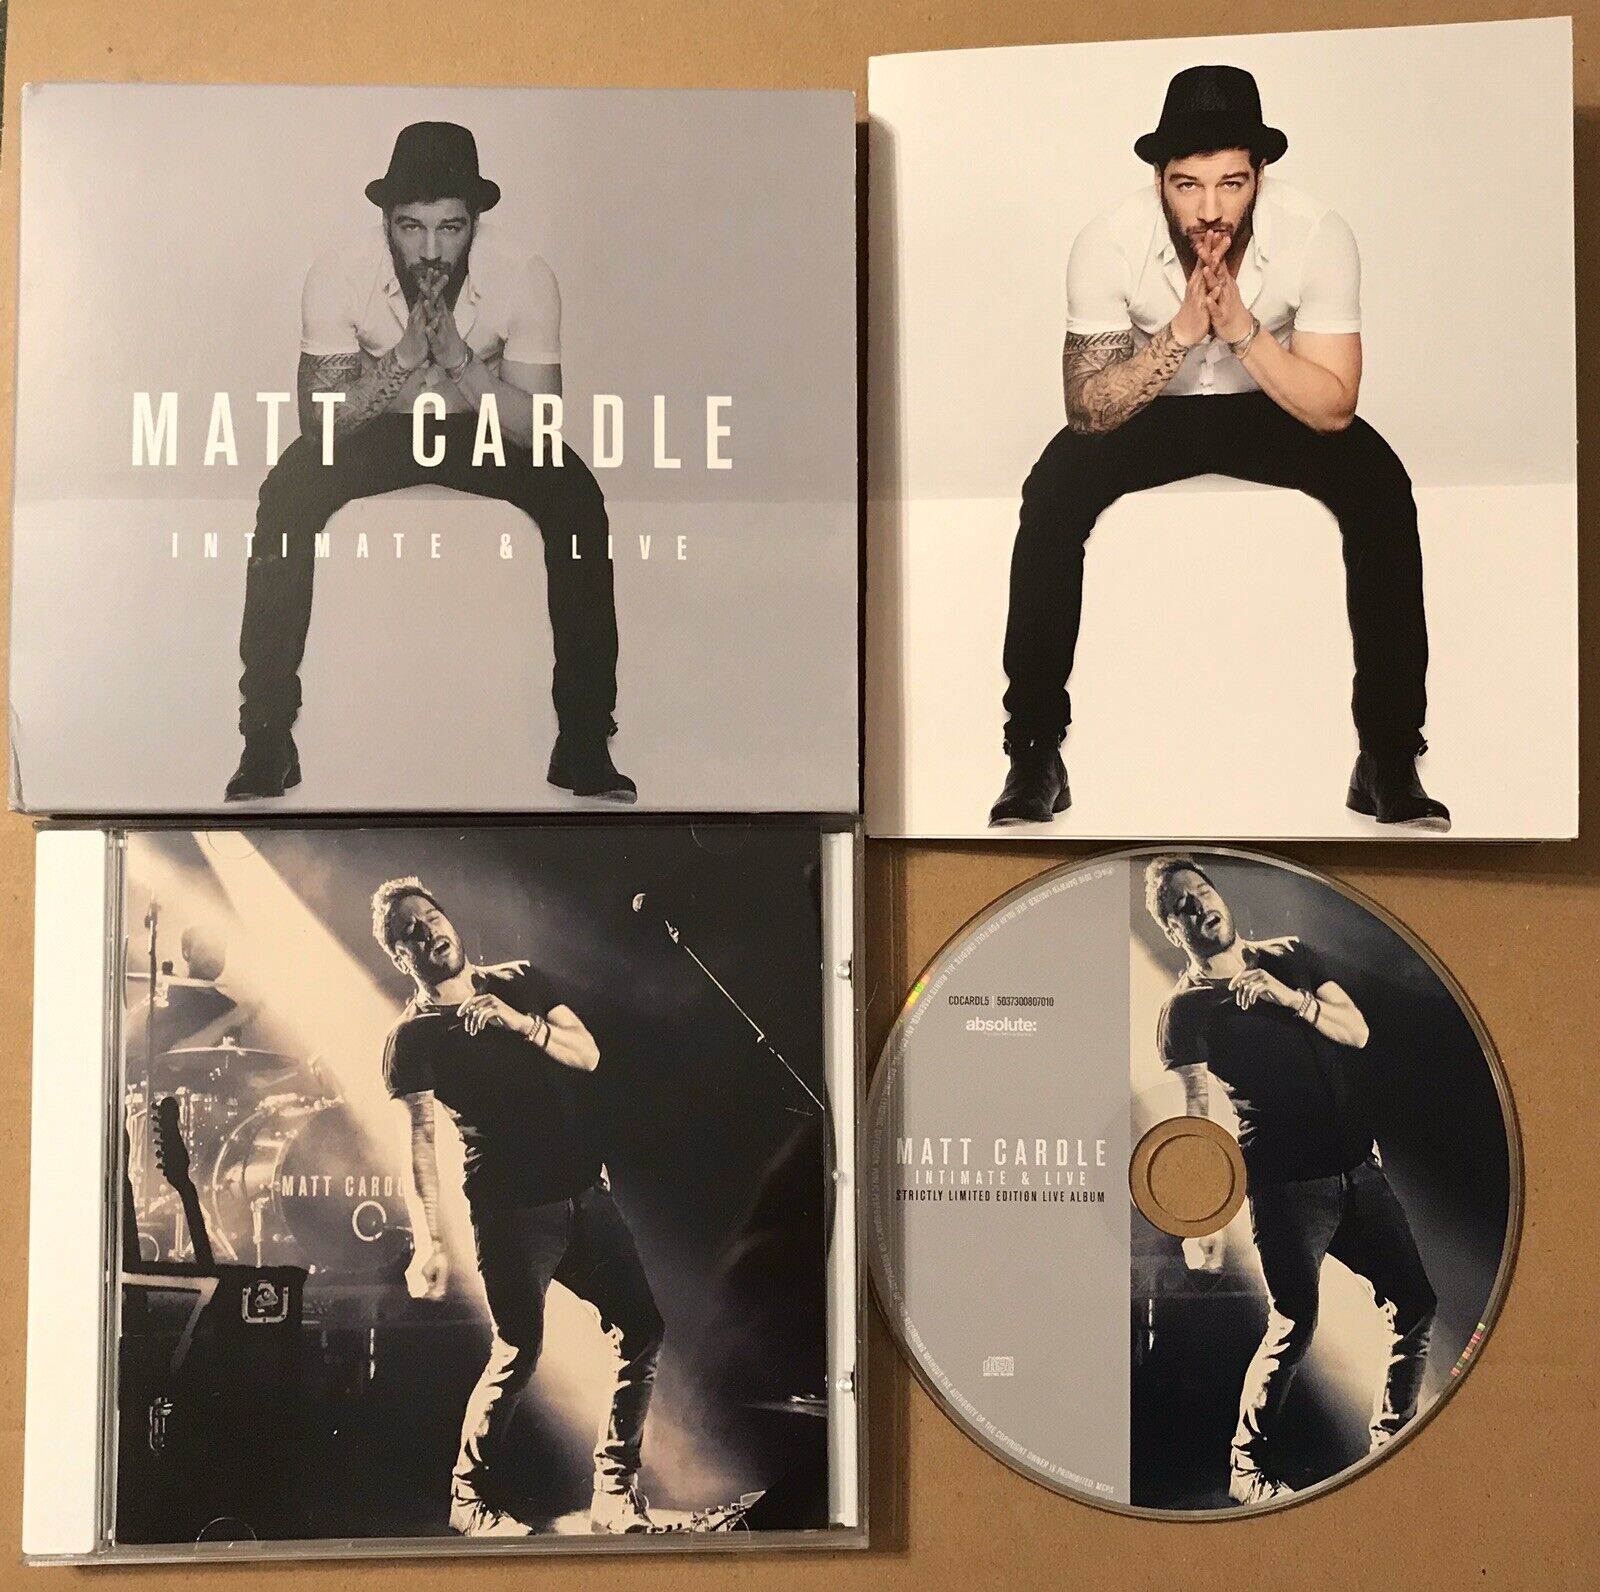 Matt Cardle Intimate & Live Limited Edition Numbered Cd Album + Postcards V Rare